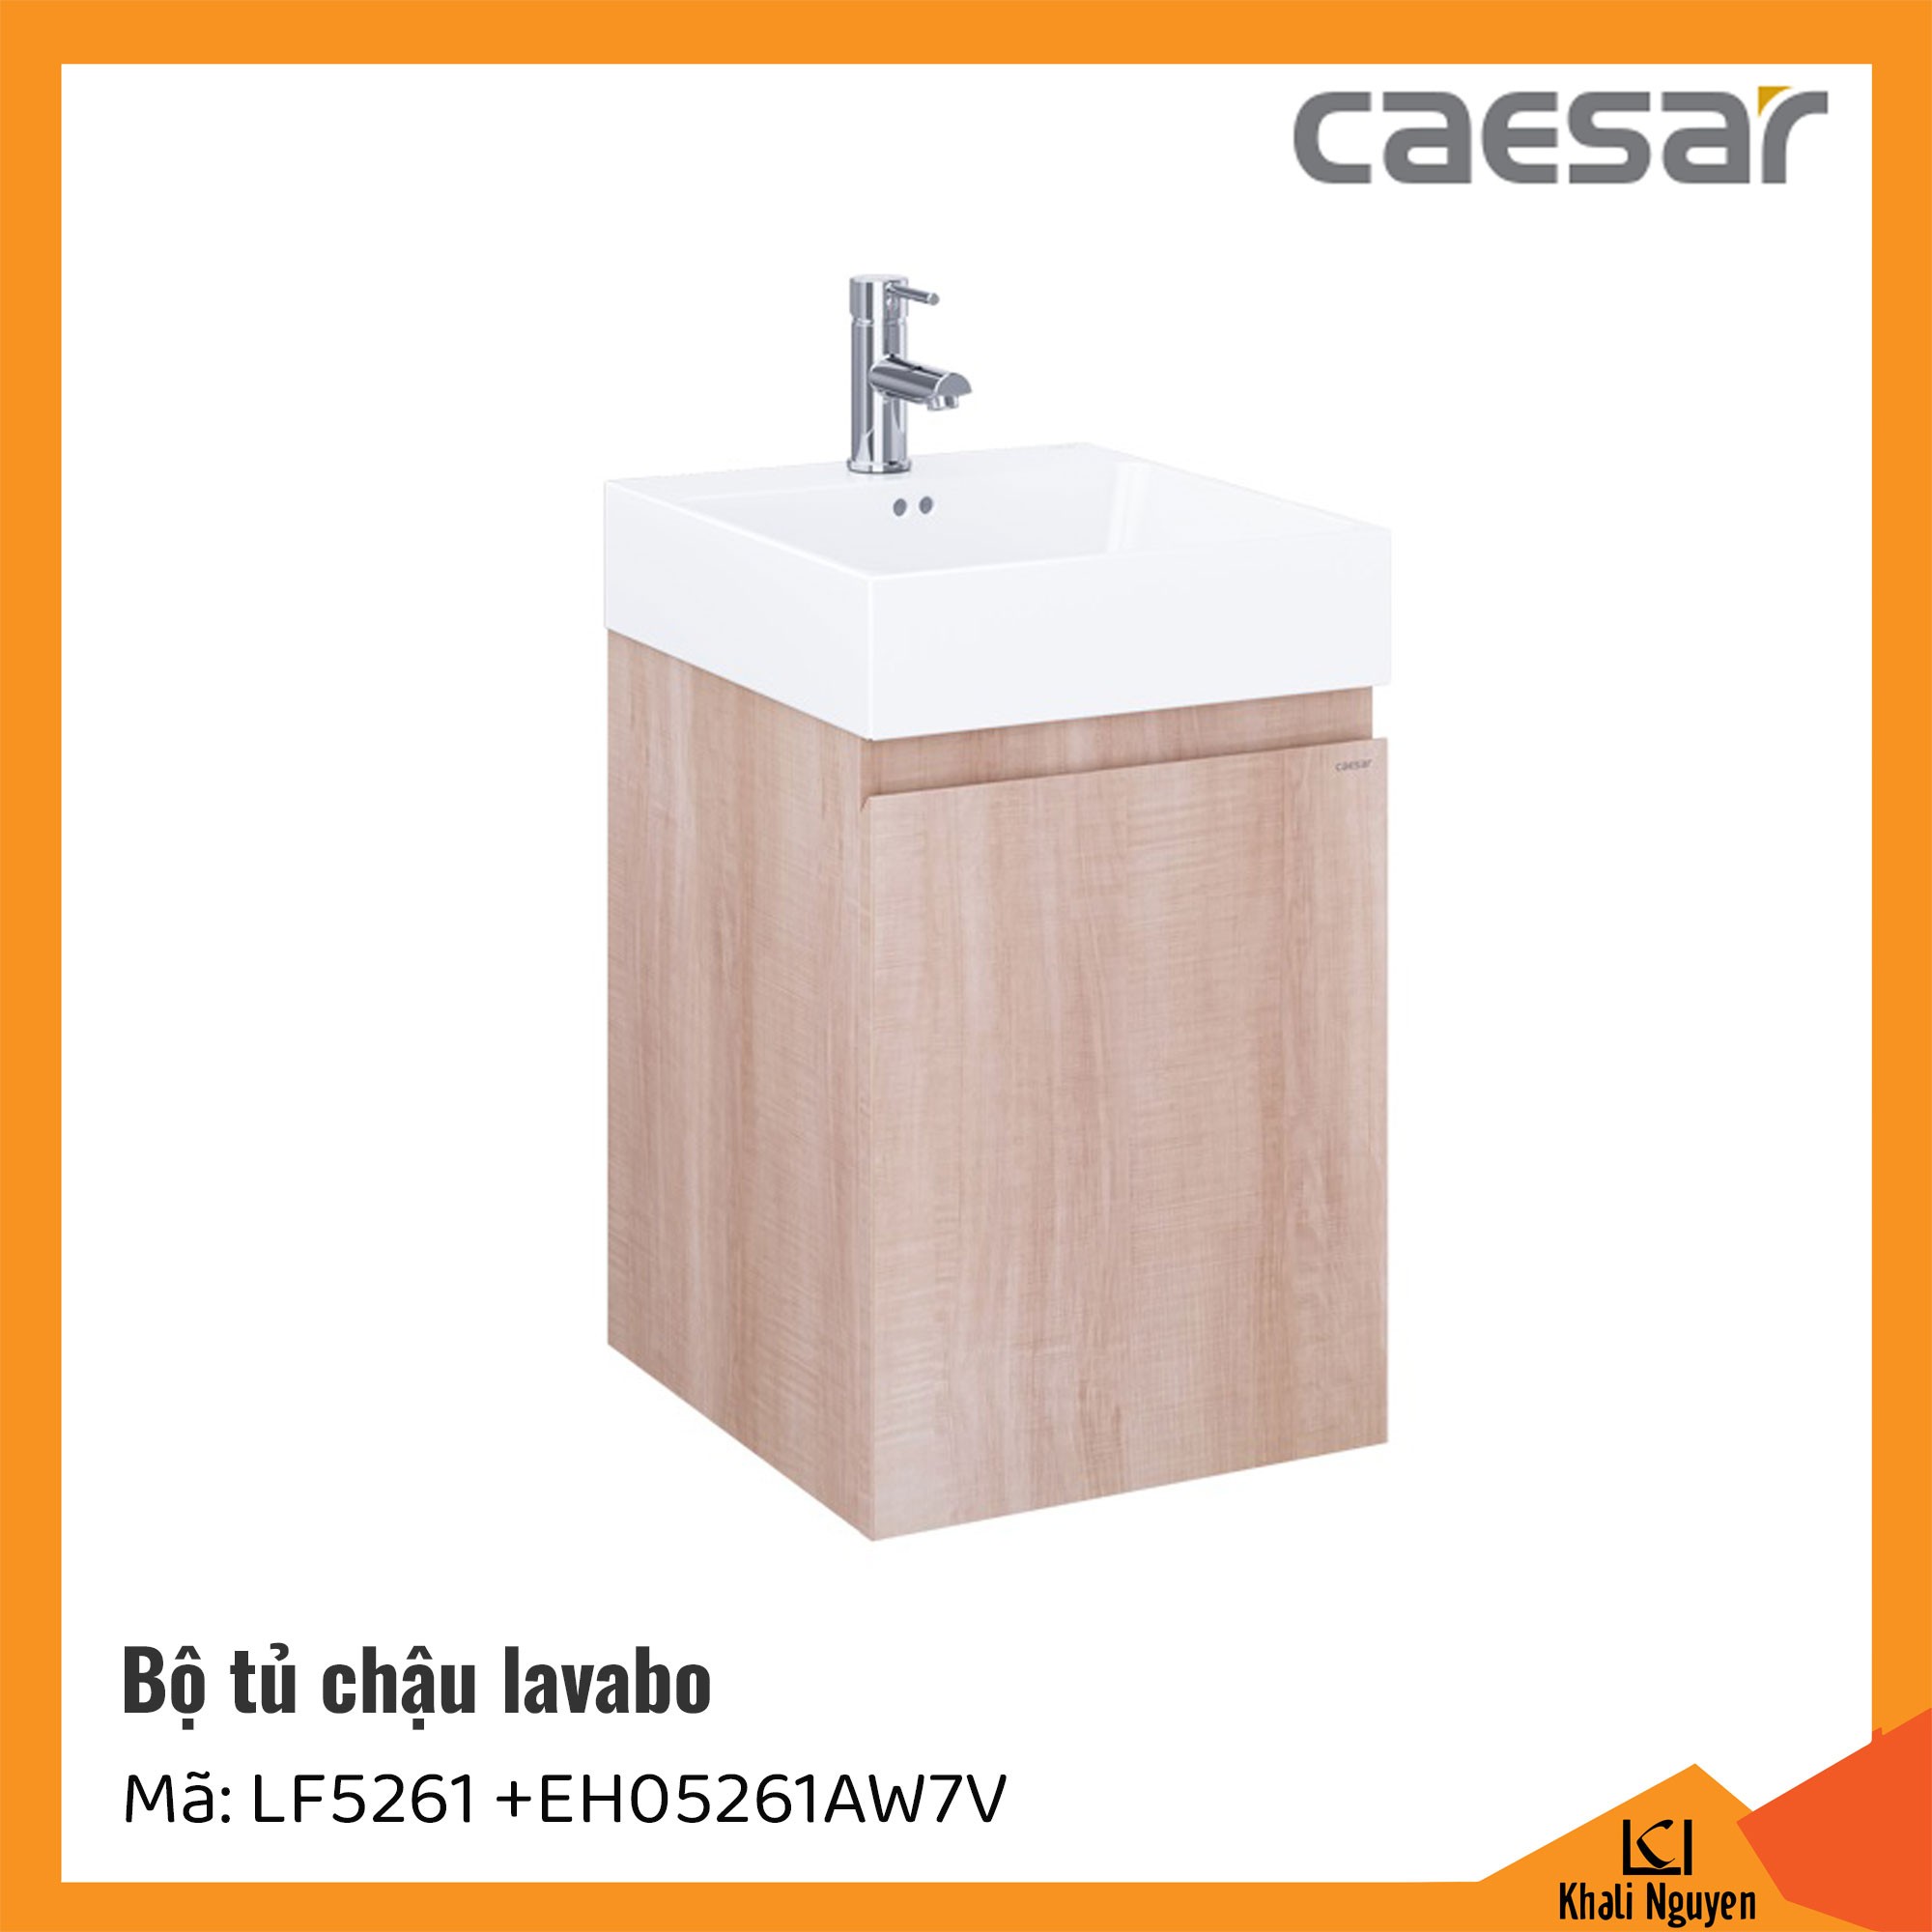 Bộ tủ chậu lavabo Caesar LF5261+EH05261AW7V